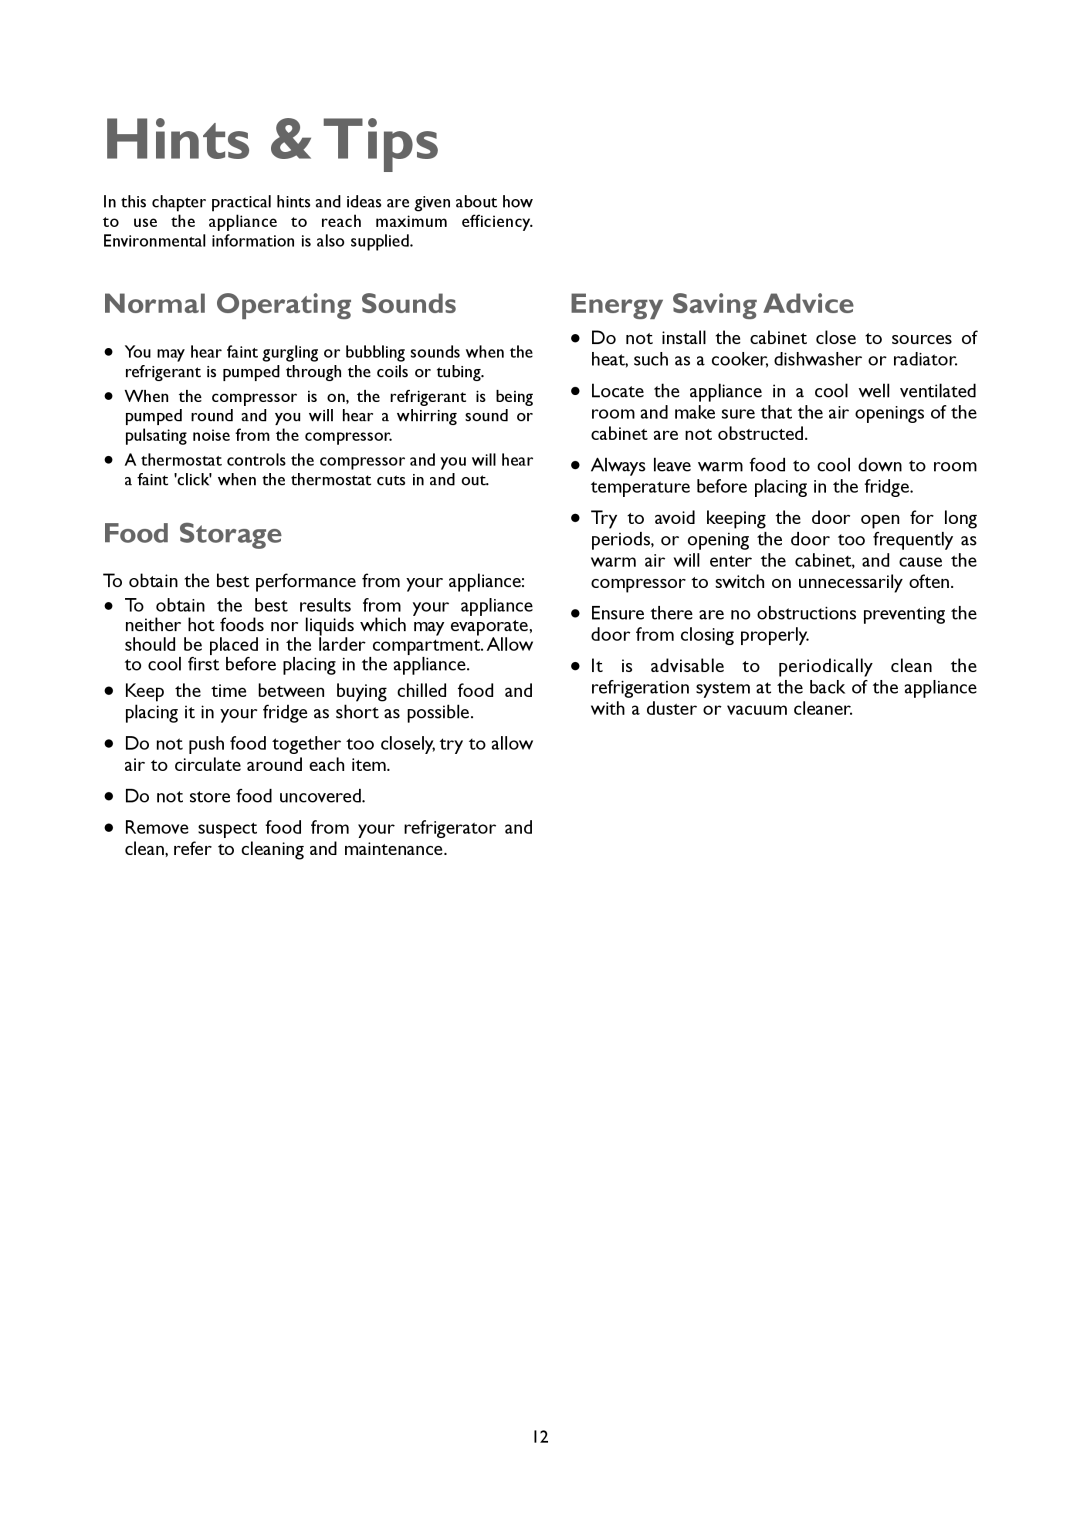 John Lewis JLUCLFW6003 instruction manual Hints & Tips, Normal Operating Sounds, Food Storage, Energy Saving Advice 